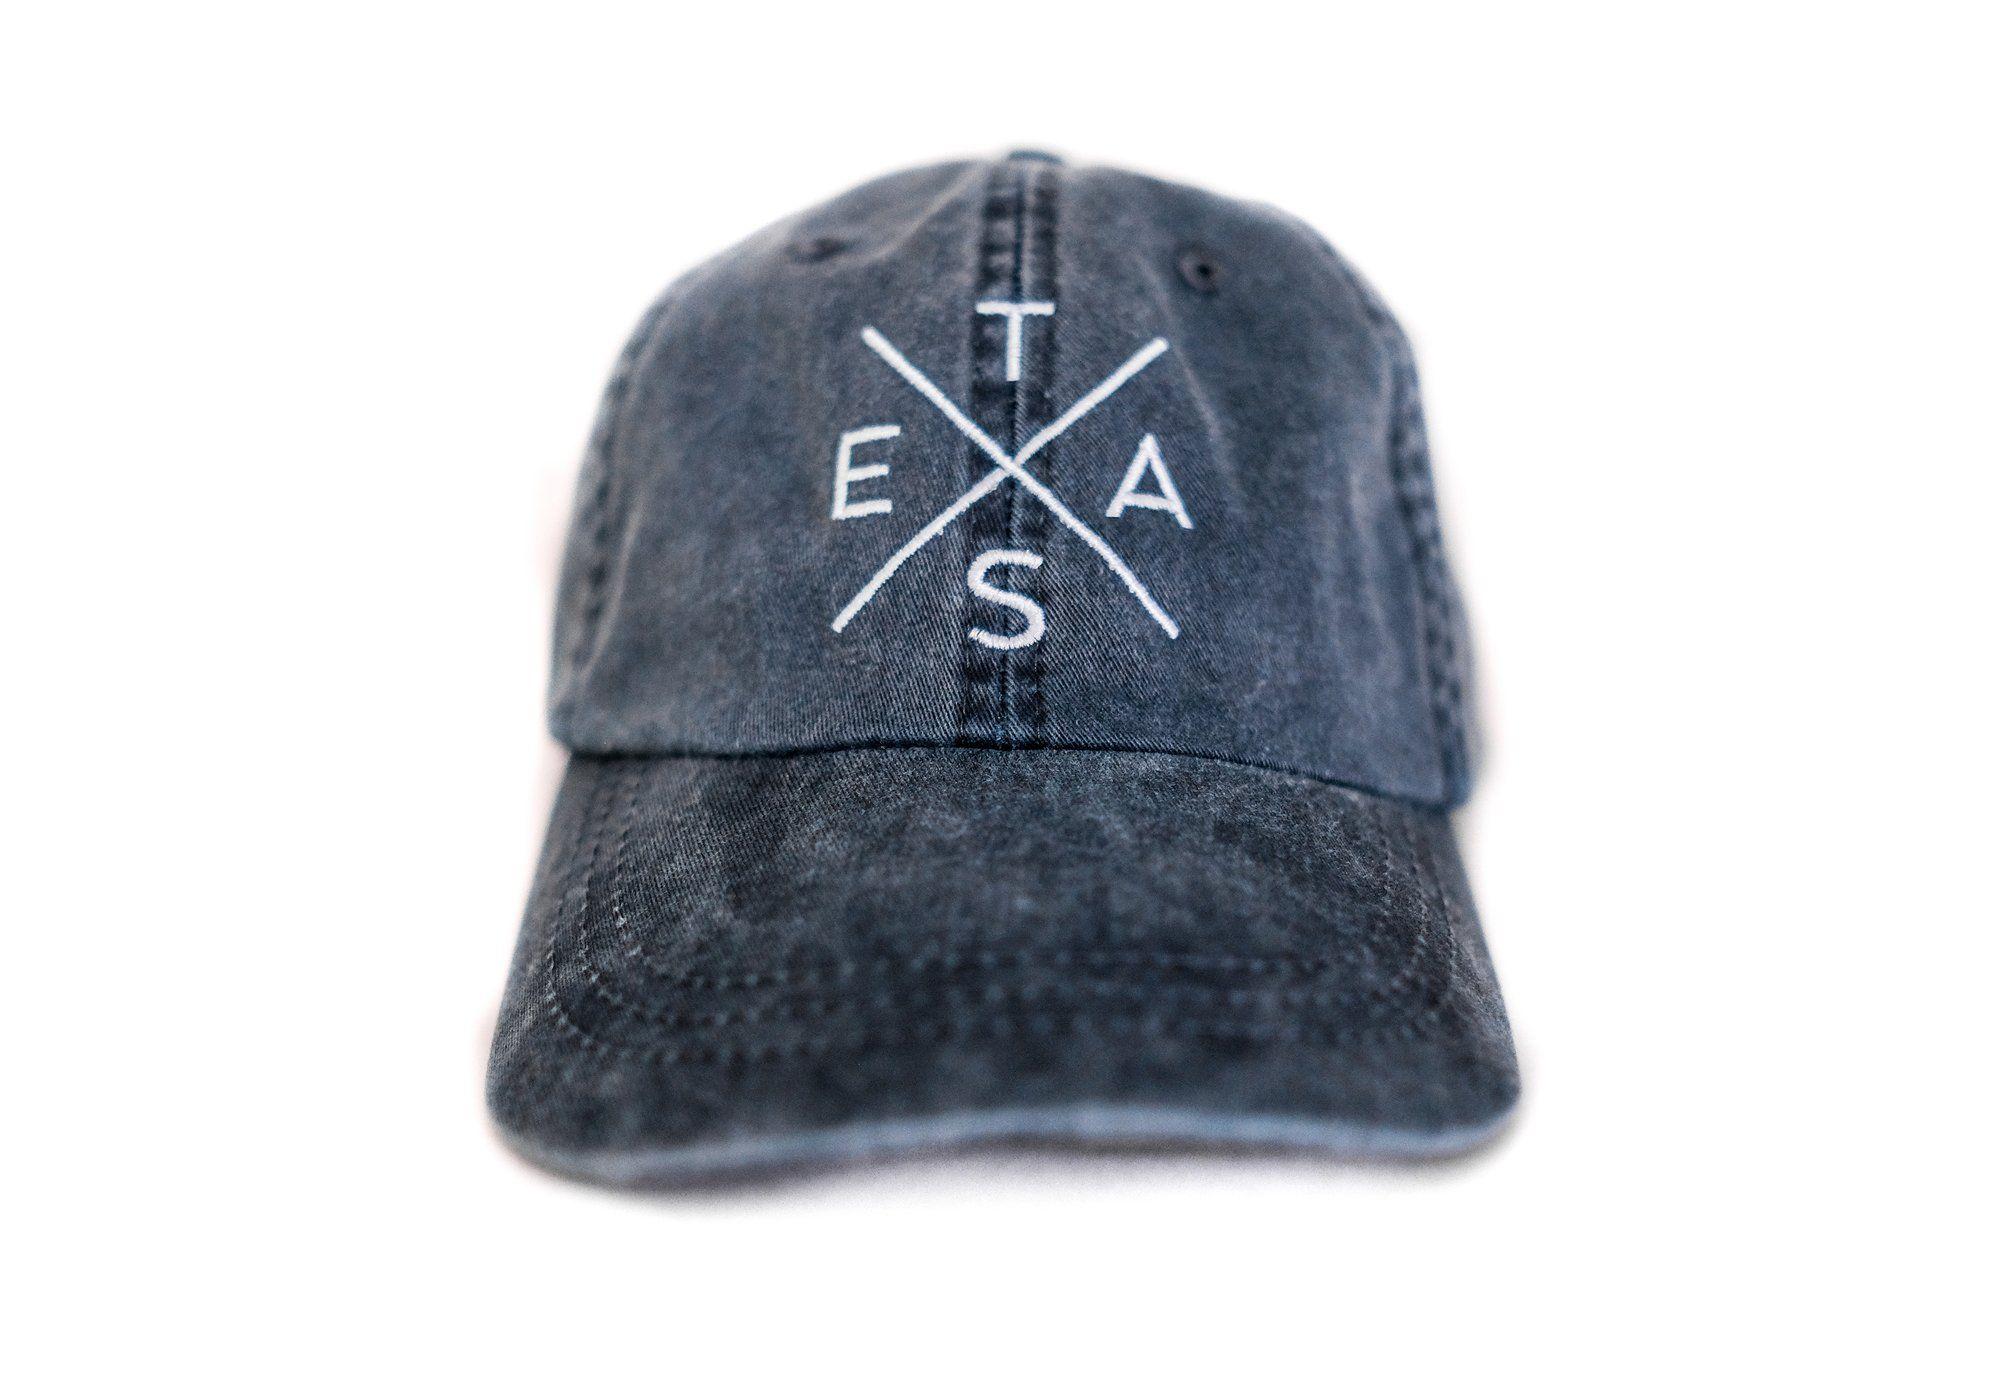 Big X Logo - Big X Texas Washed Cotton Twill Hat (3 Color Options)